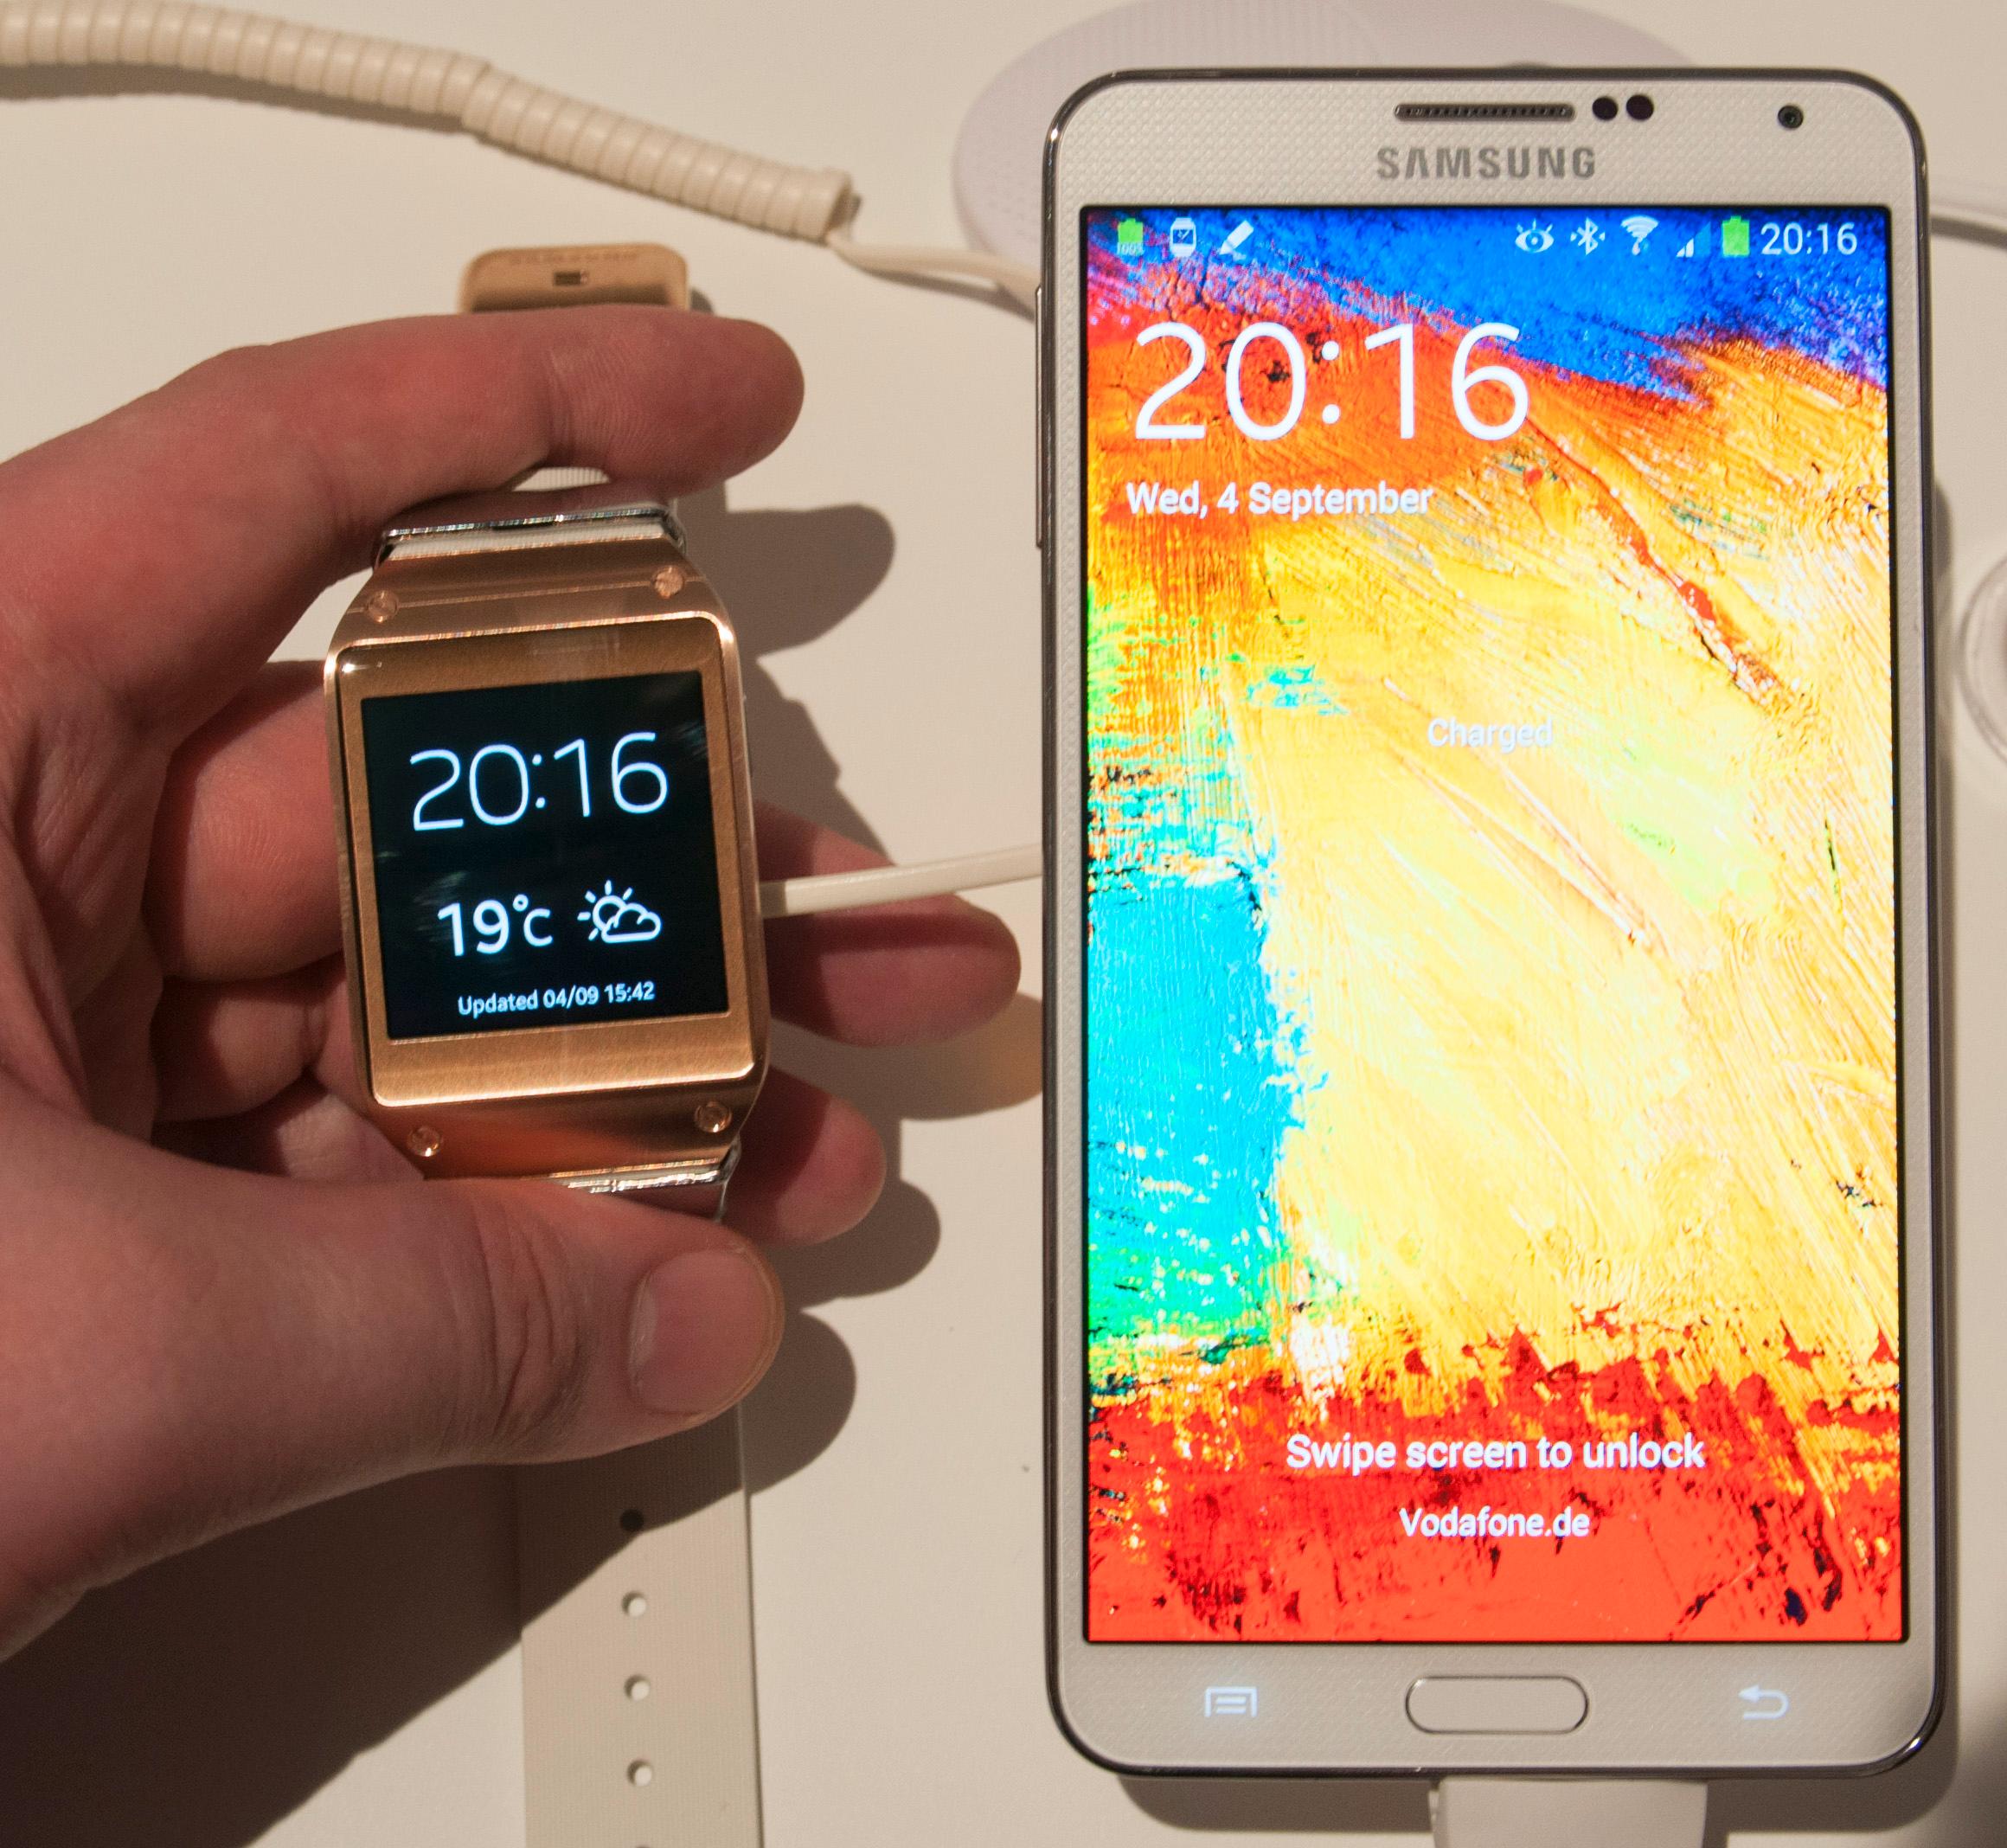 Det perfekte par? Galaxy Gear blir lansert sammen med Galaxy Note 3, men også Galaxy Note II og Galaxy S4 vil få oppdateringer som støtter klokken.Foto: Finn Jarle Kvalheim, Amobil.no